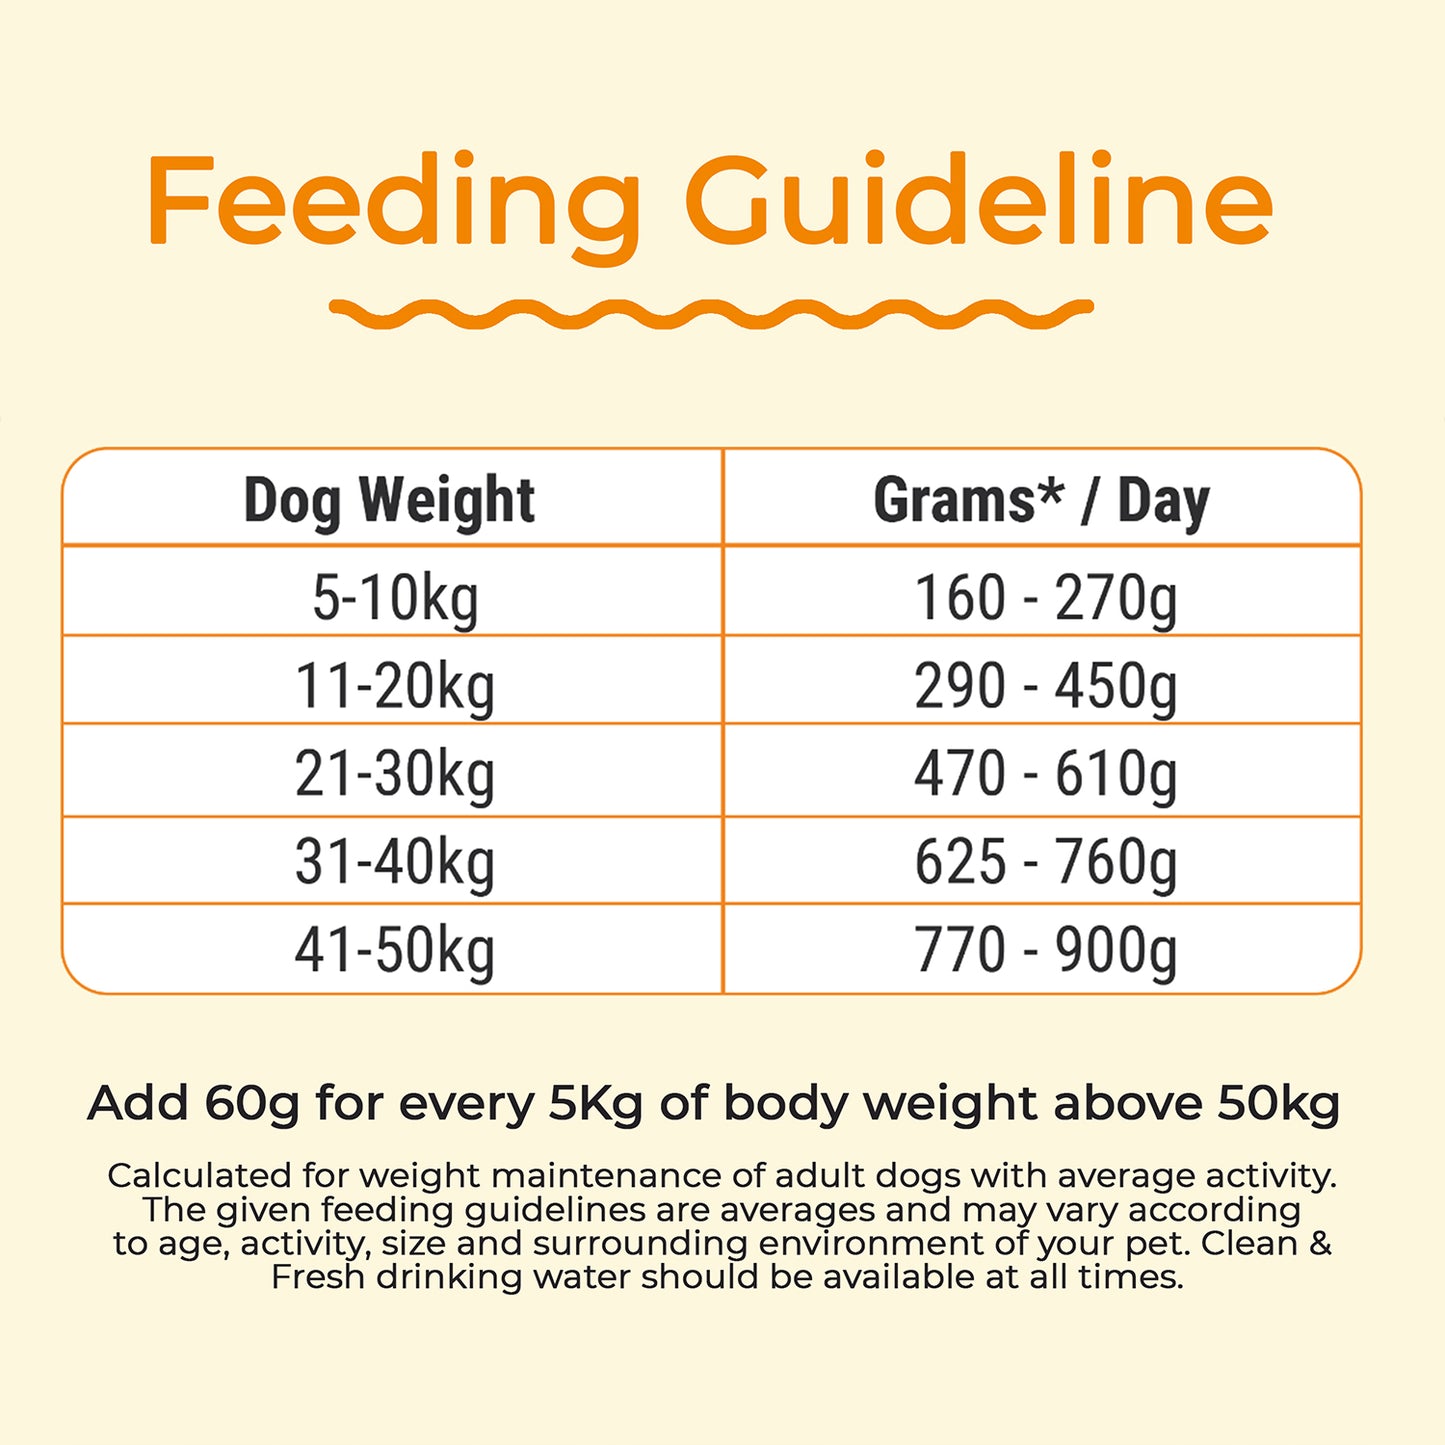 Freshwoof | All Natural Vegetarian/Vegan Wet Dog Food (Brown Rice & Beans)(Set of 3 | 500g each)